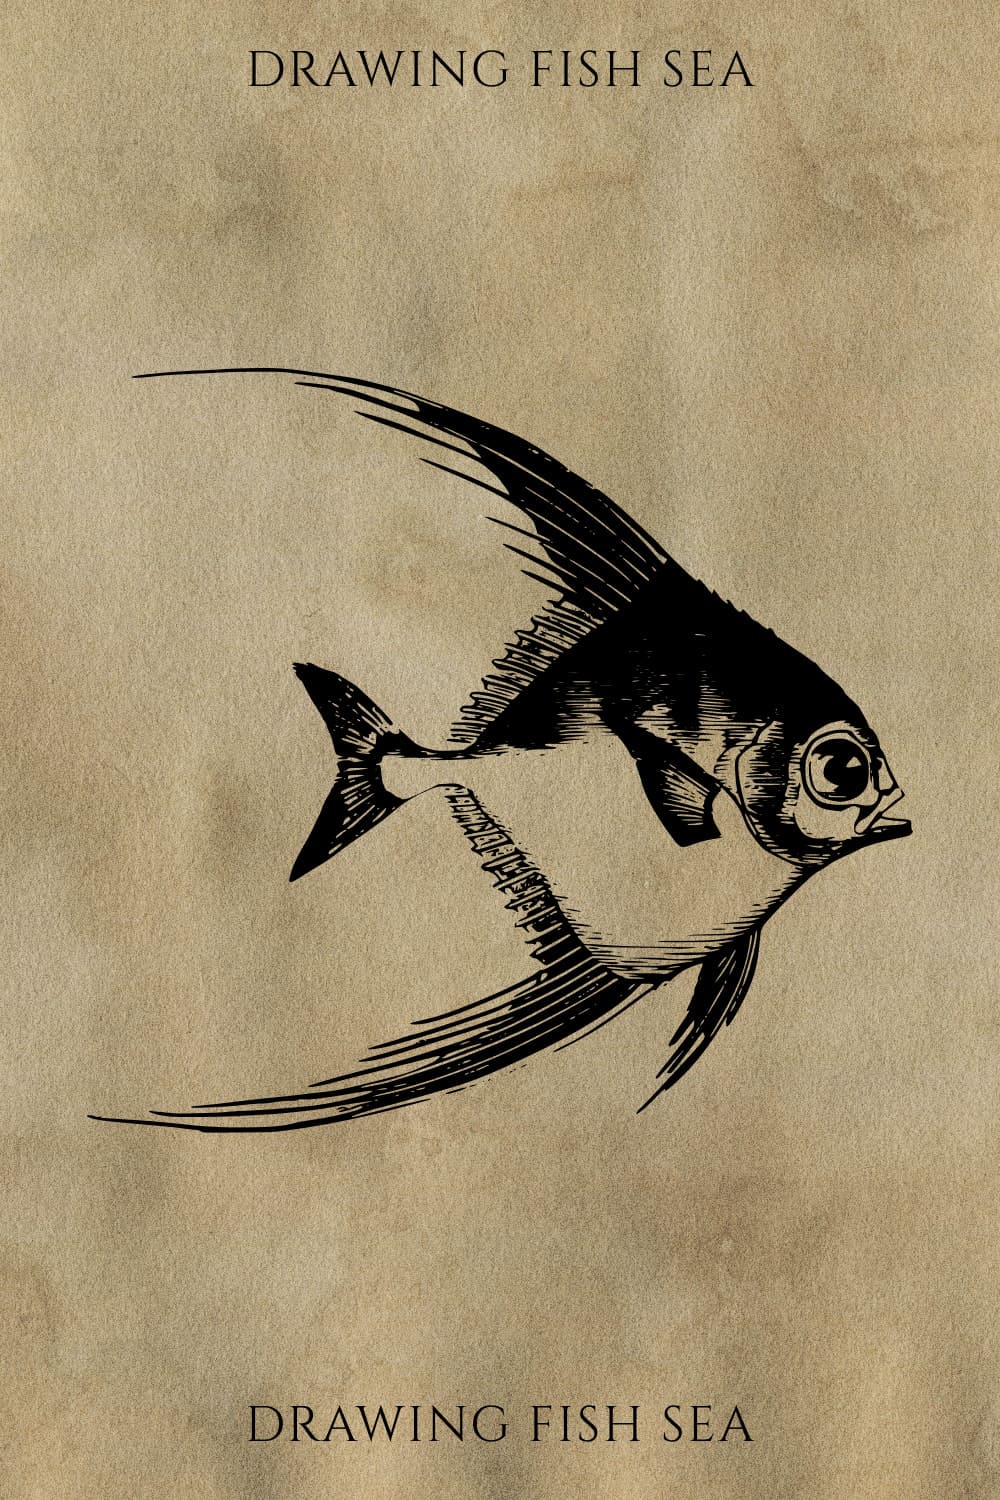 Drawing Fish Sea - Pinterest.